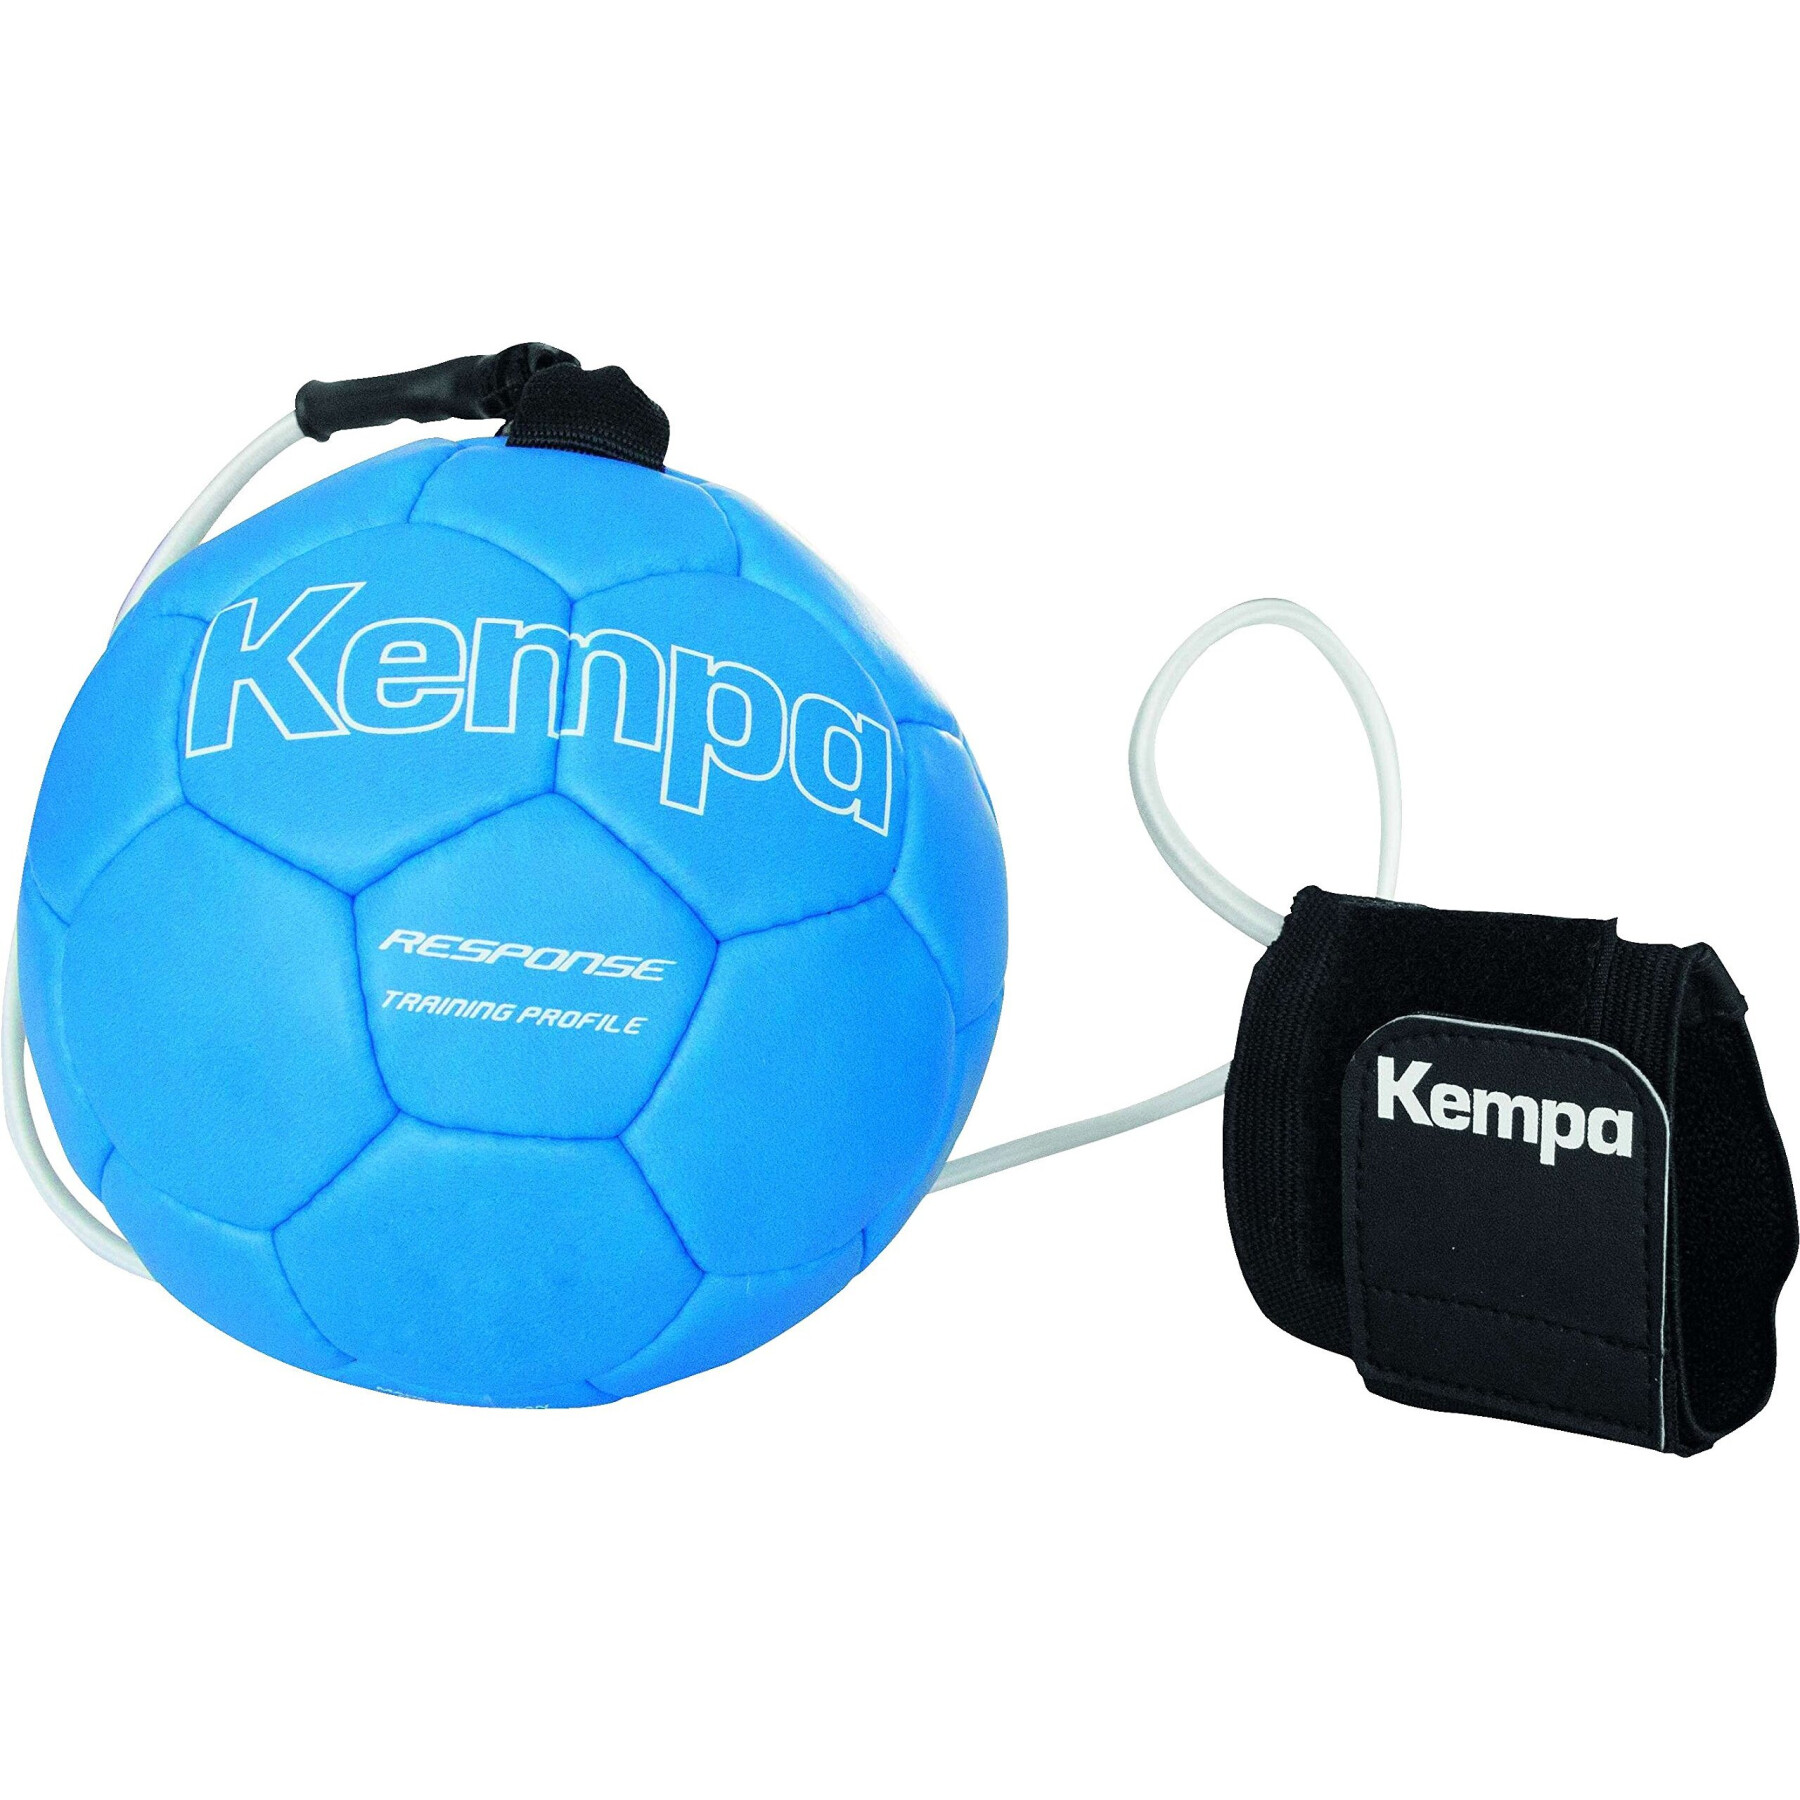 Training ball Kempa Response